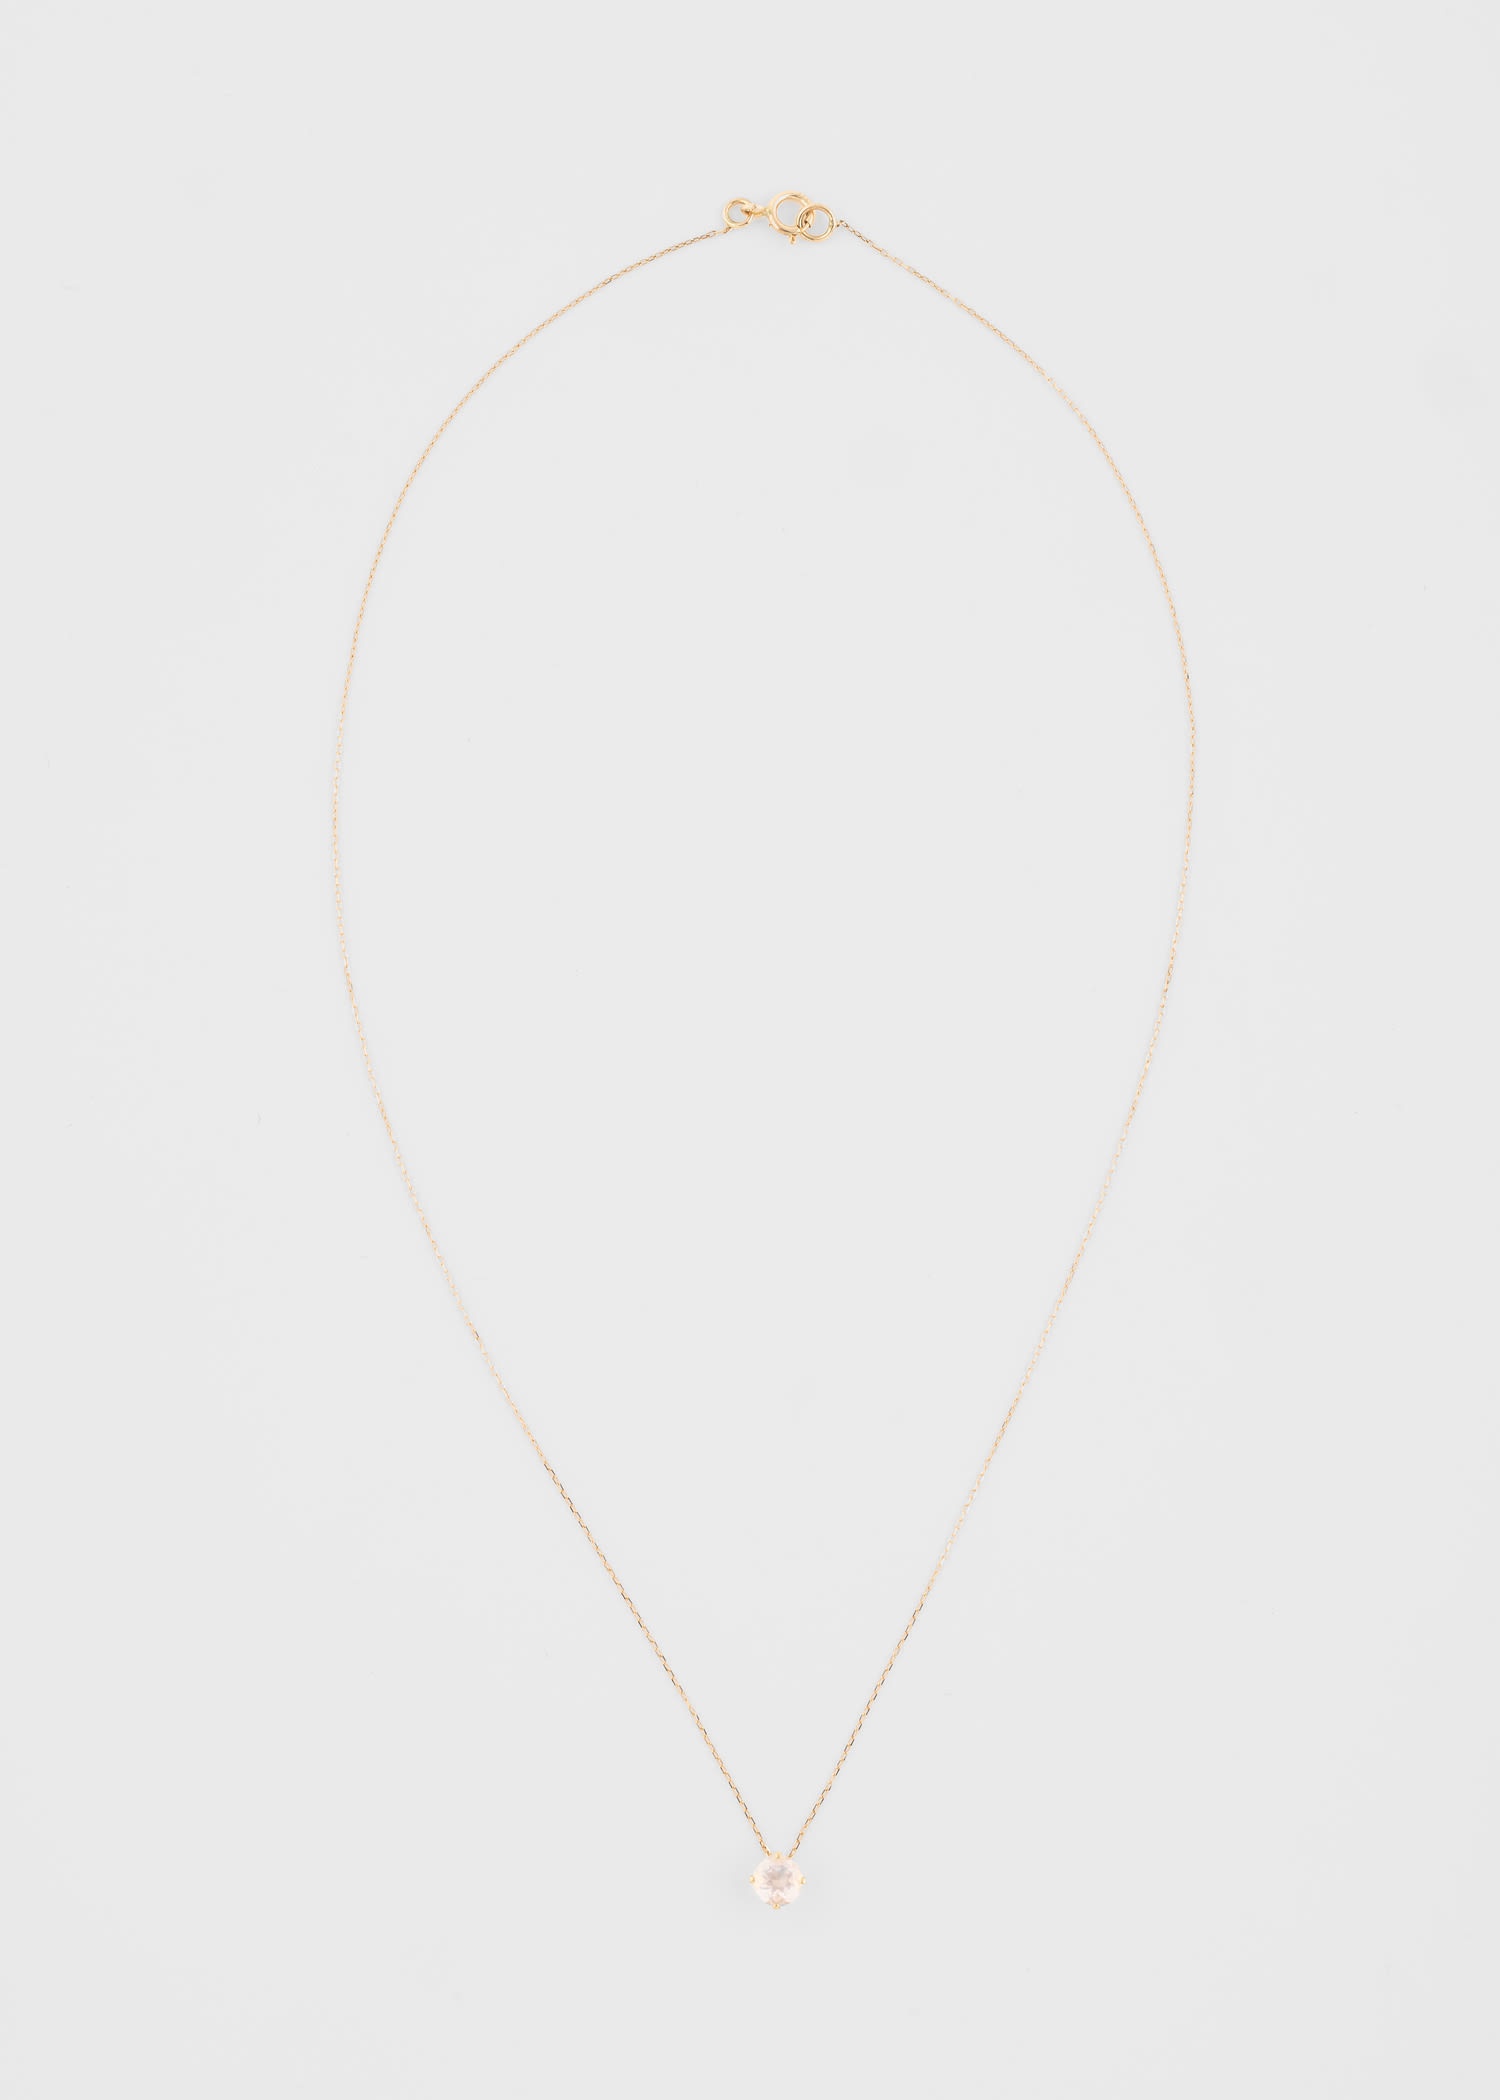 'Taida' Pink Quartz Necklace by Helena Rohner - 2